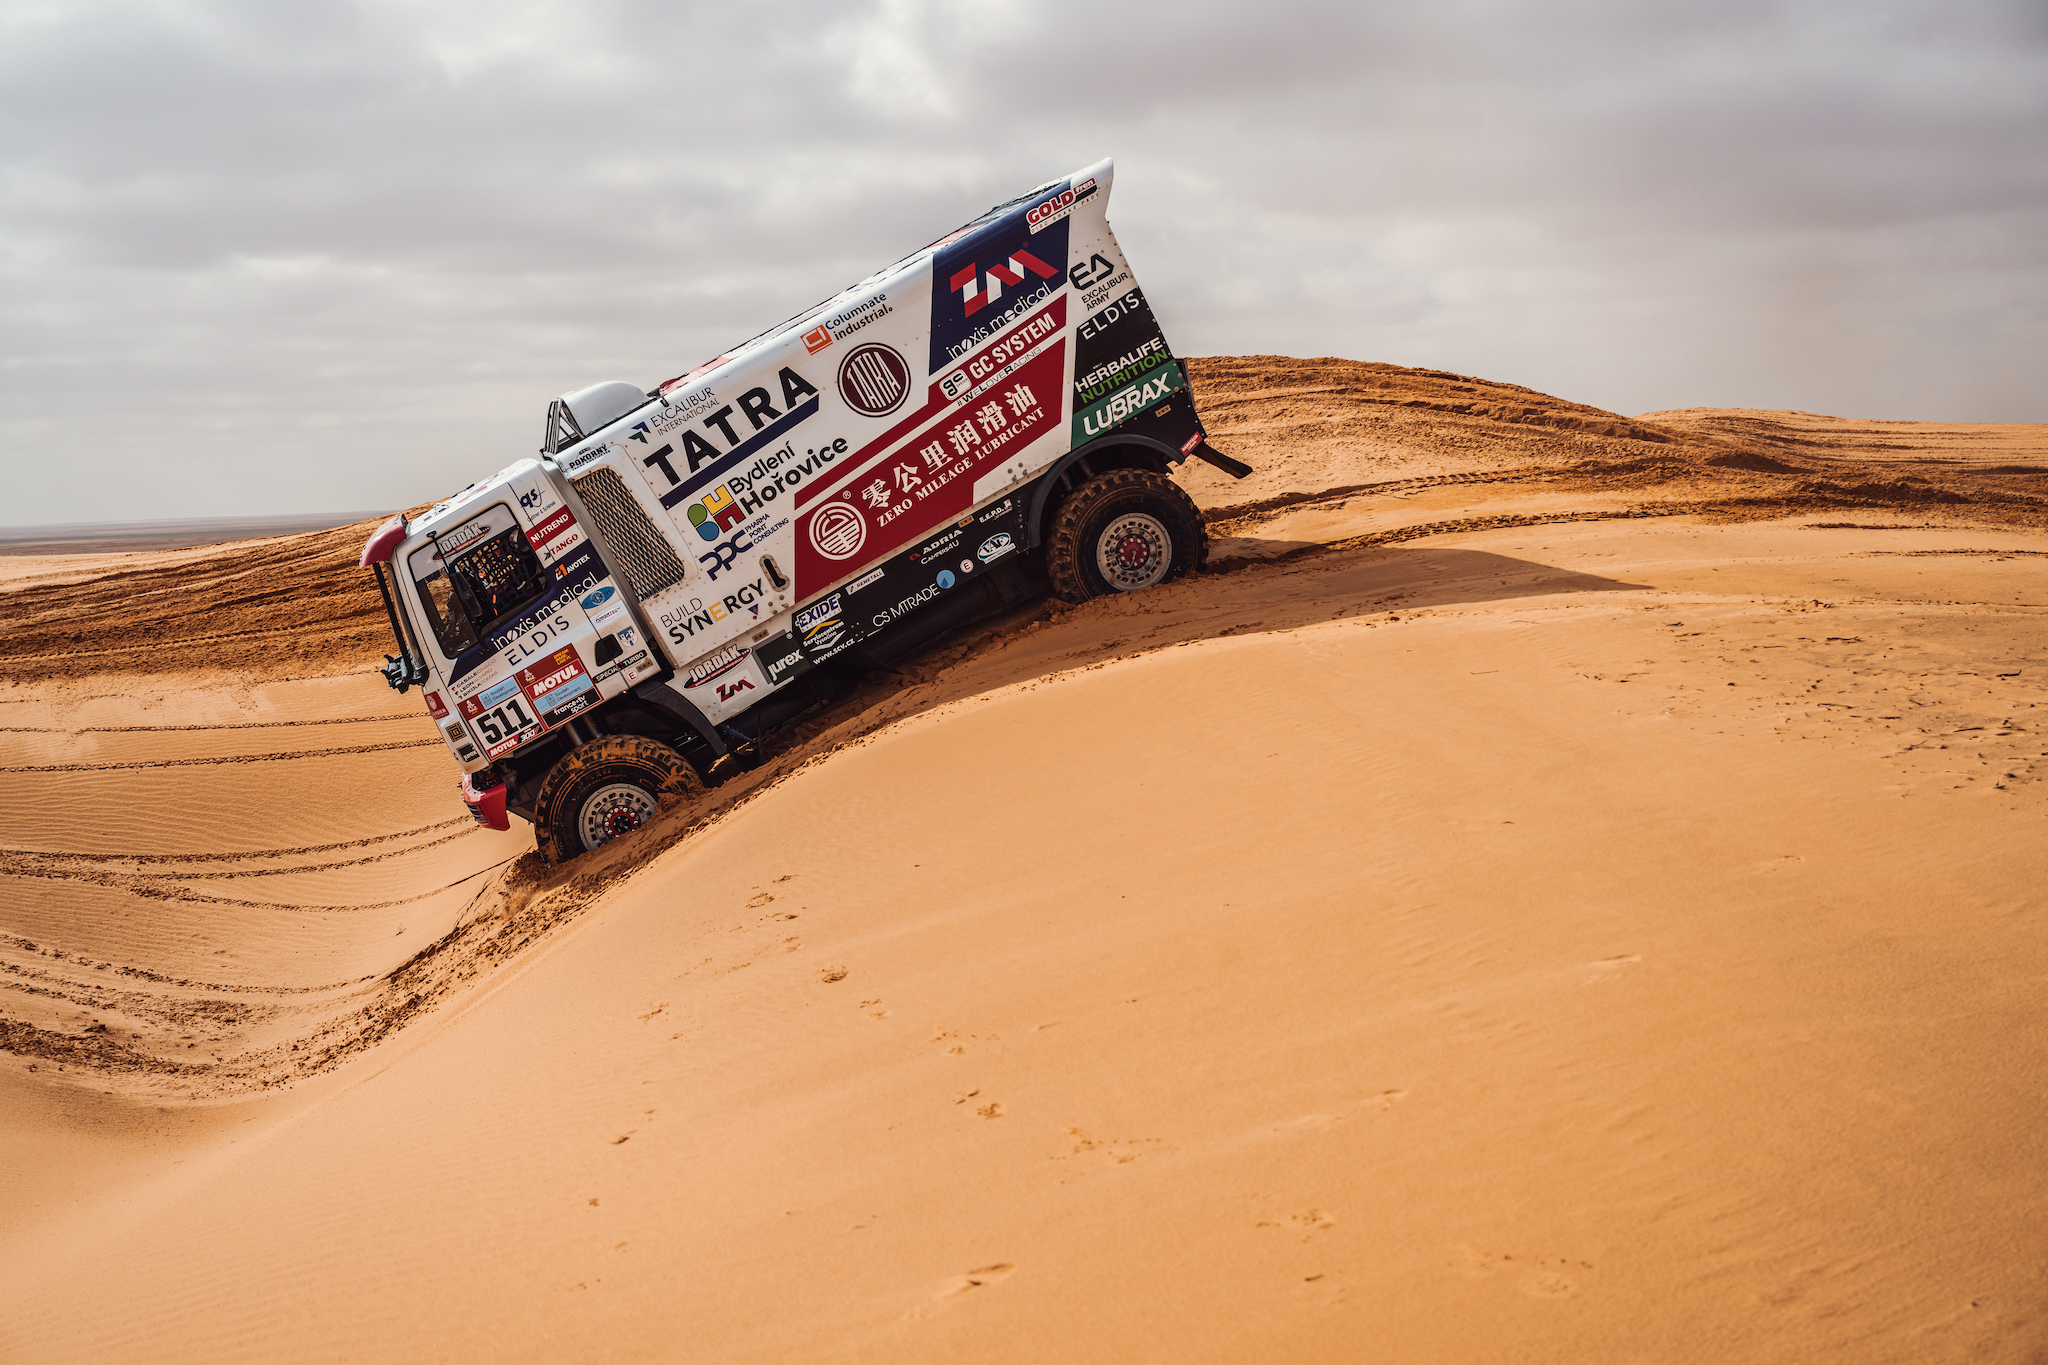 Martin Koloc: We’ve chosen a really good strategy for Rally Dakar